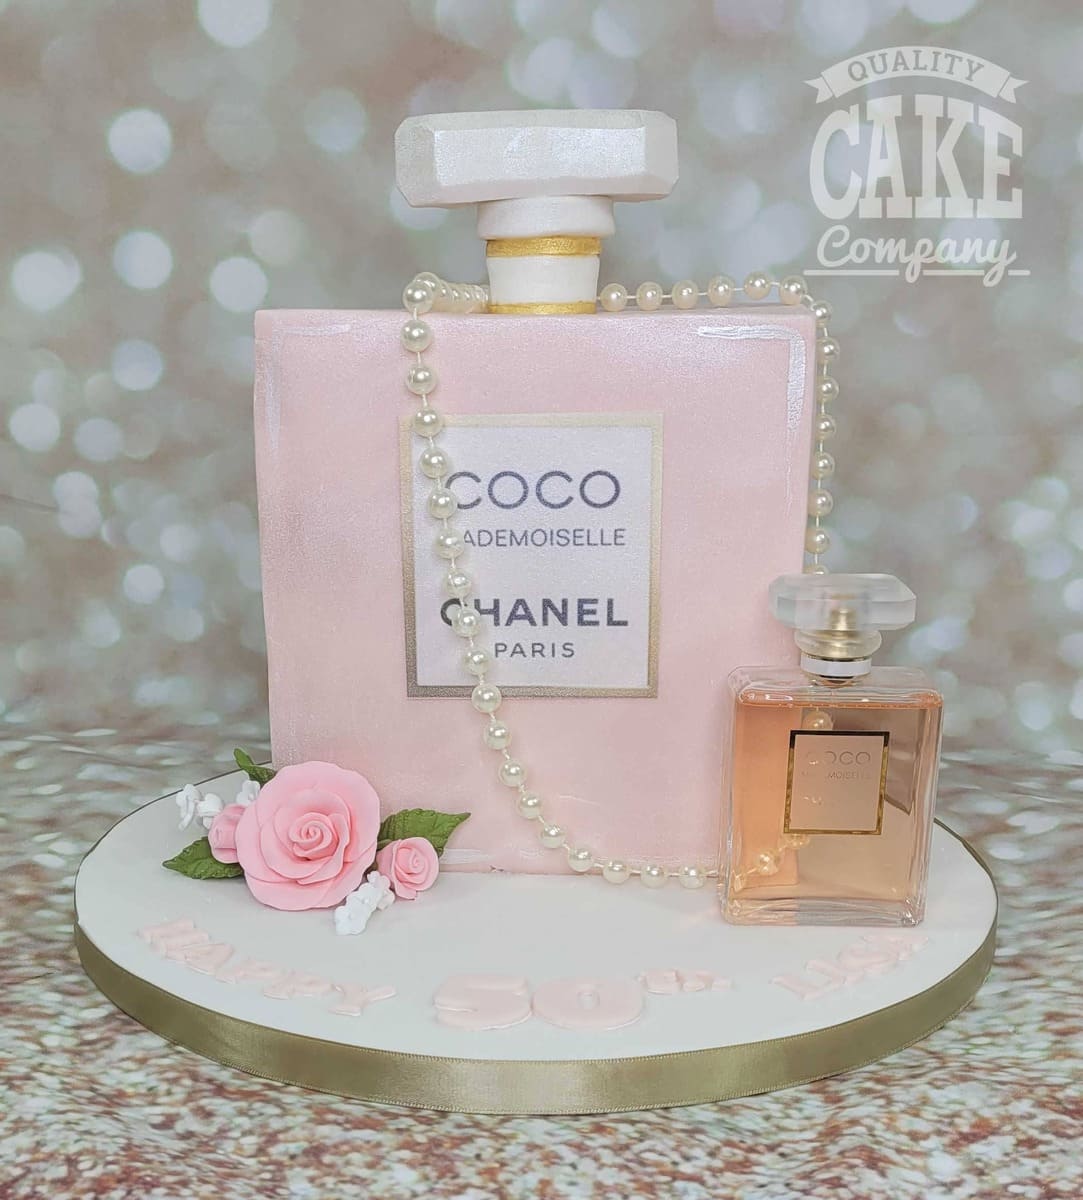 Lee-Ann's Cakery - Perfume inspired cake | Facebook